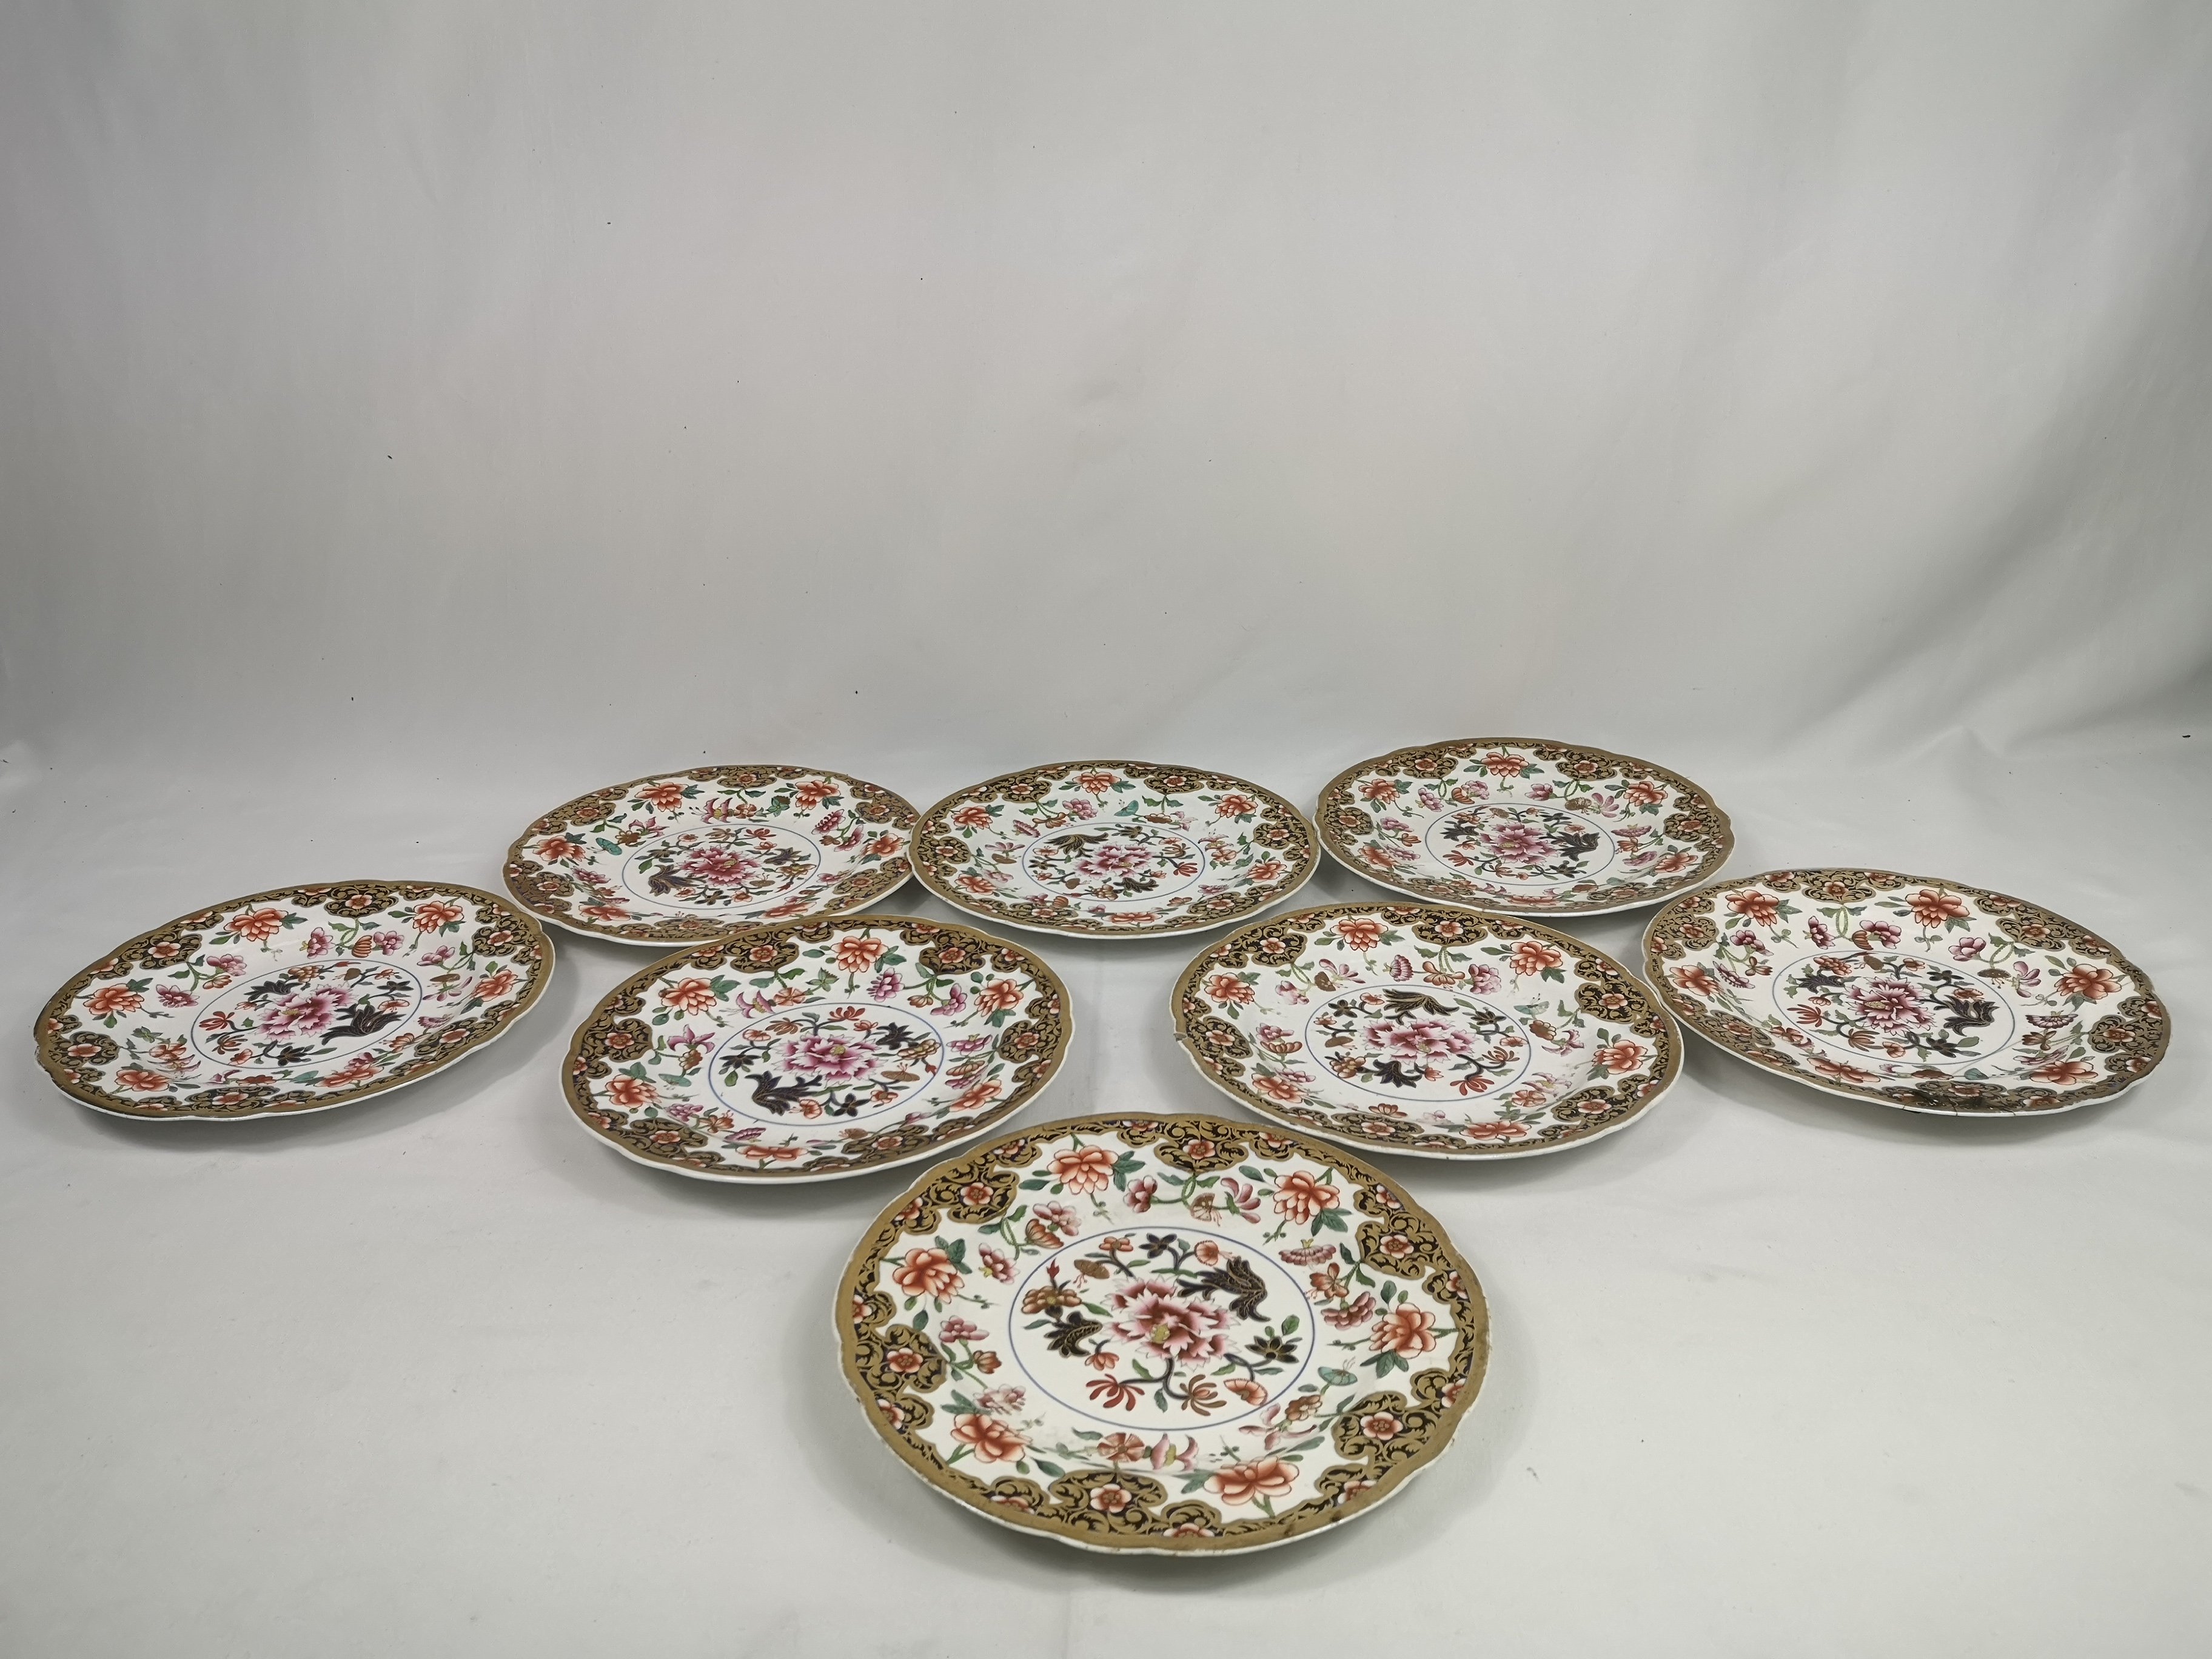 Eight 19th century Spode plates